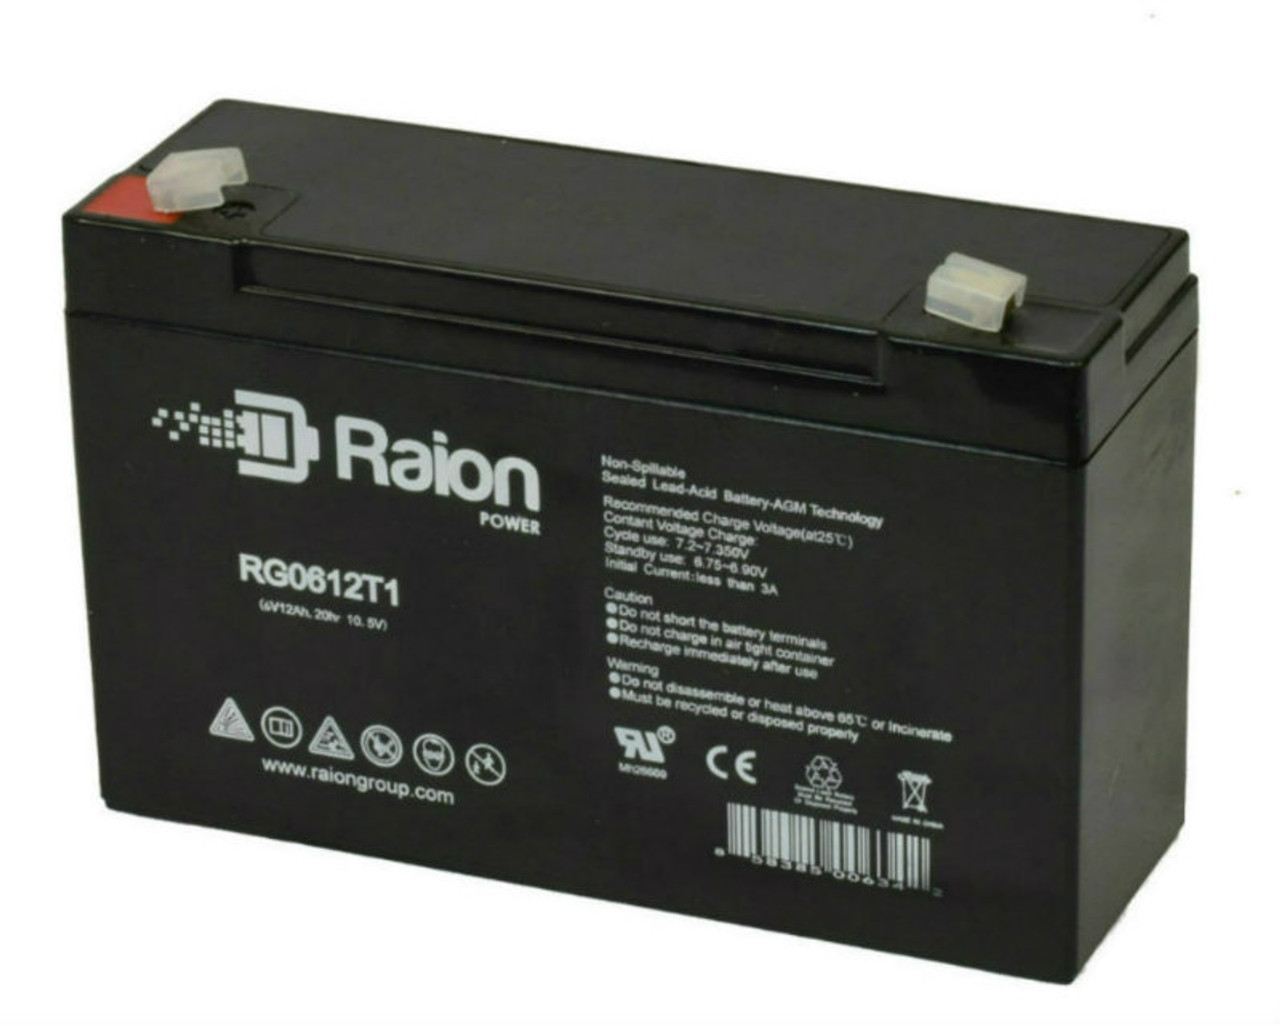 Raion Power RG06120T1 Replacement Emergency Light Battery for Sonnenschein POWERWARE 1000